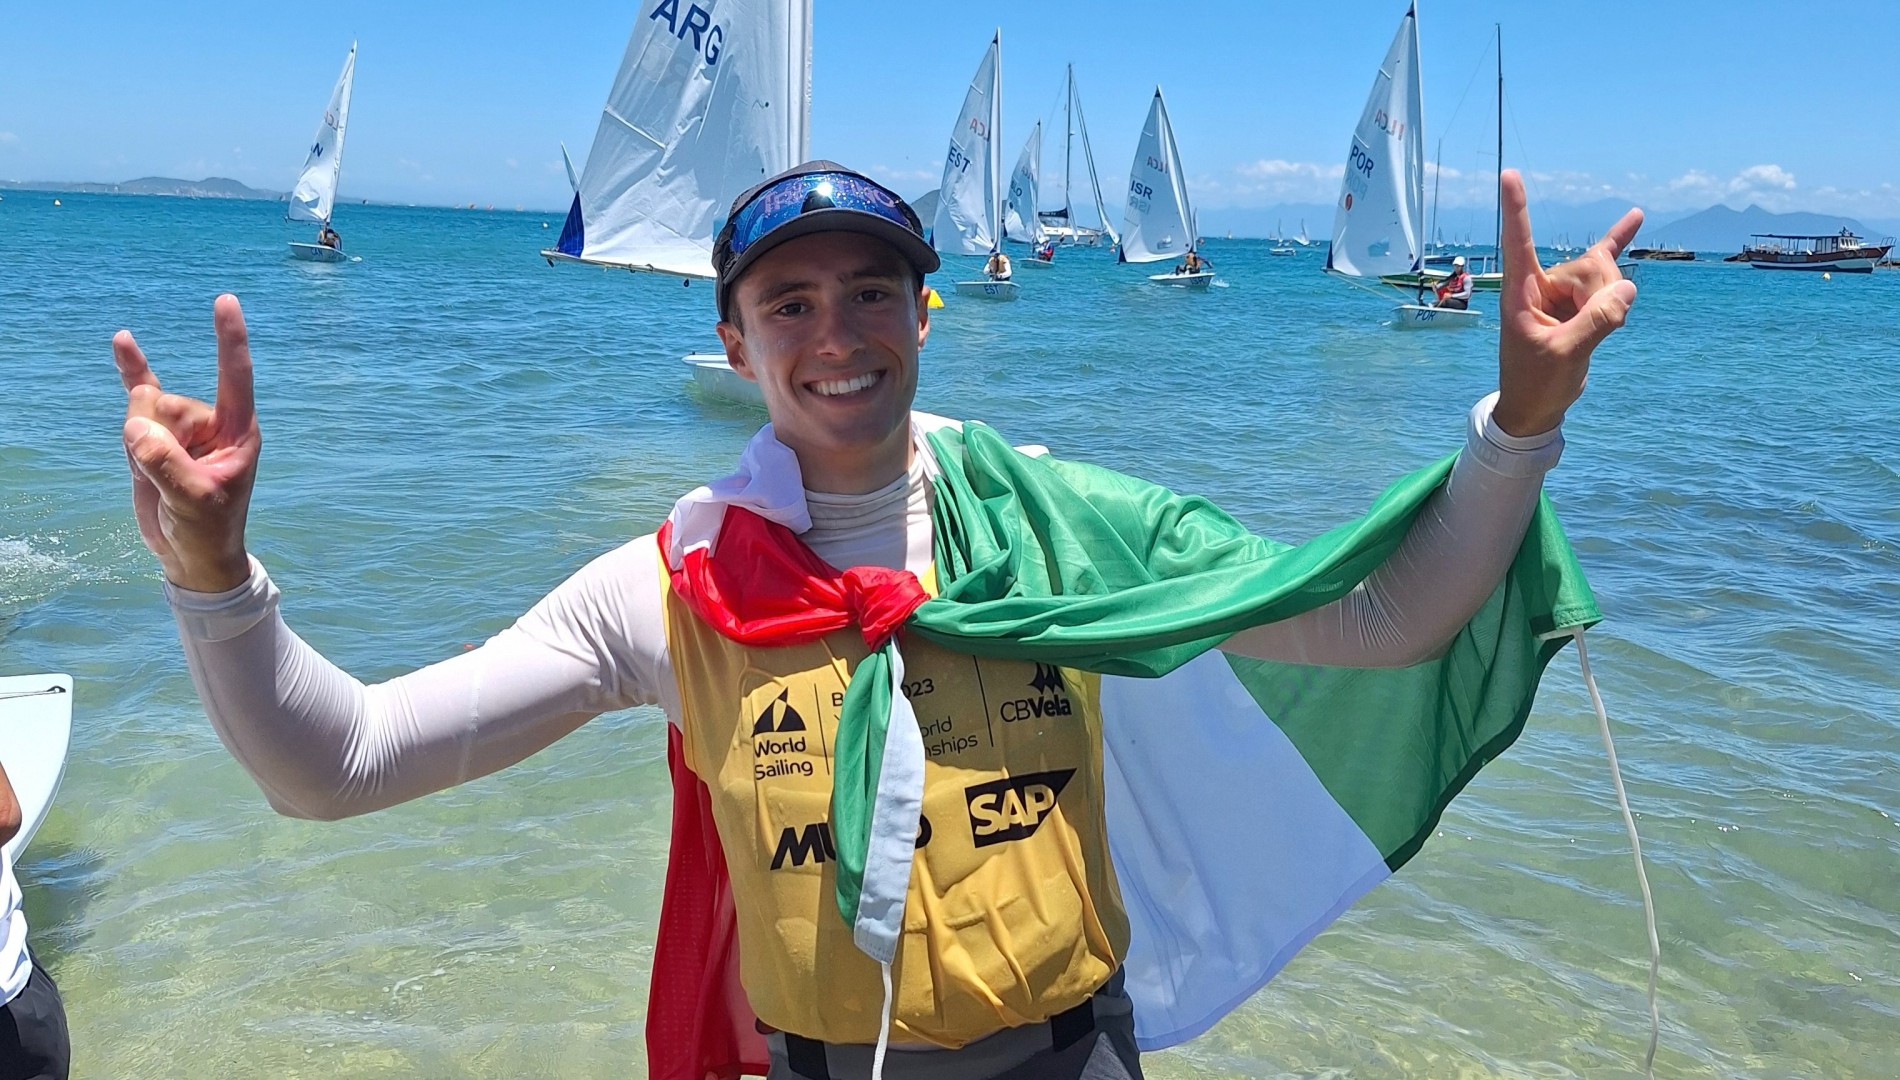 Youth Sailing World Championships: Buzios si tinge d'Azzurro. 6 medaglie